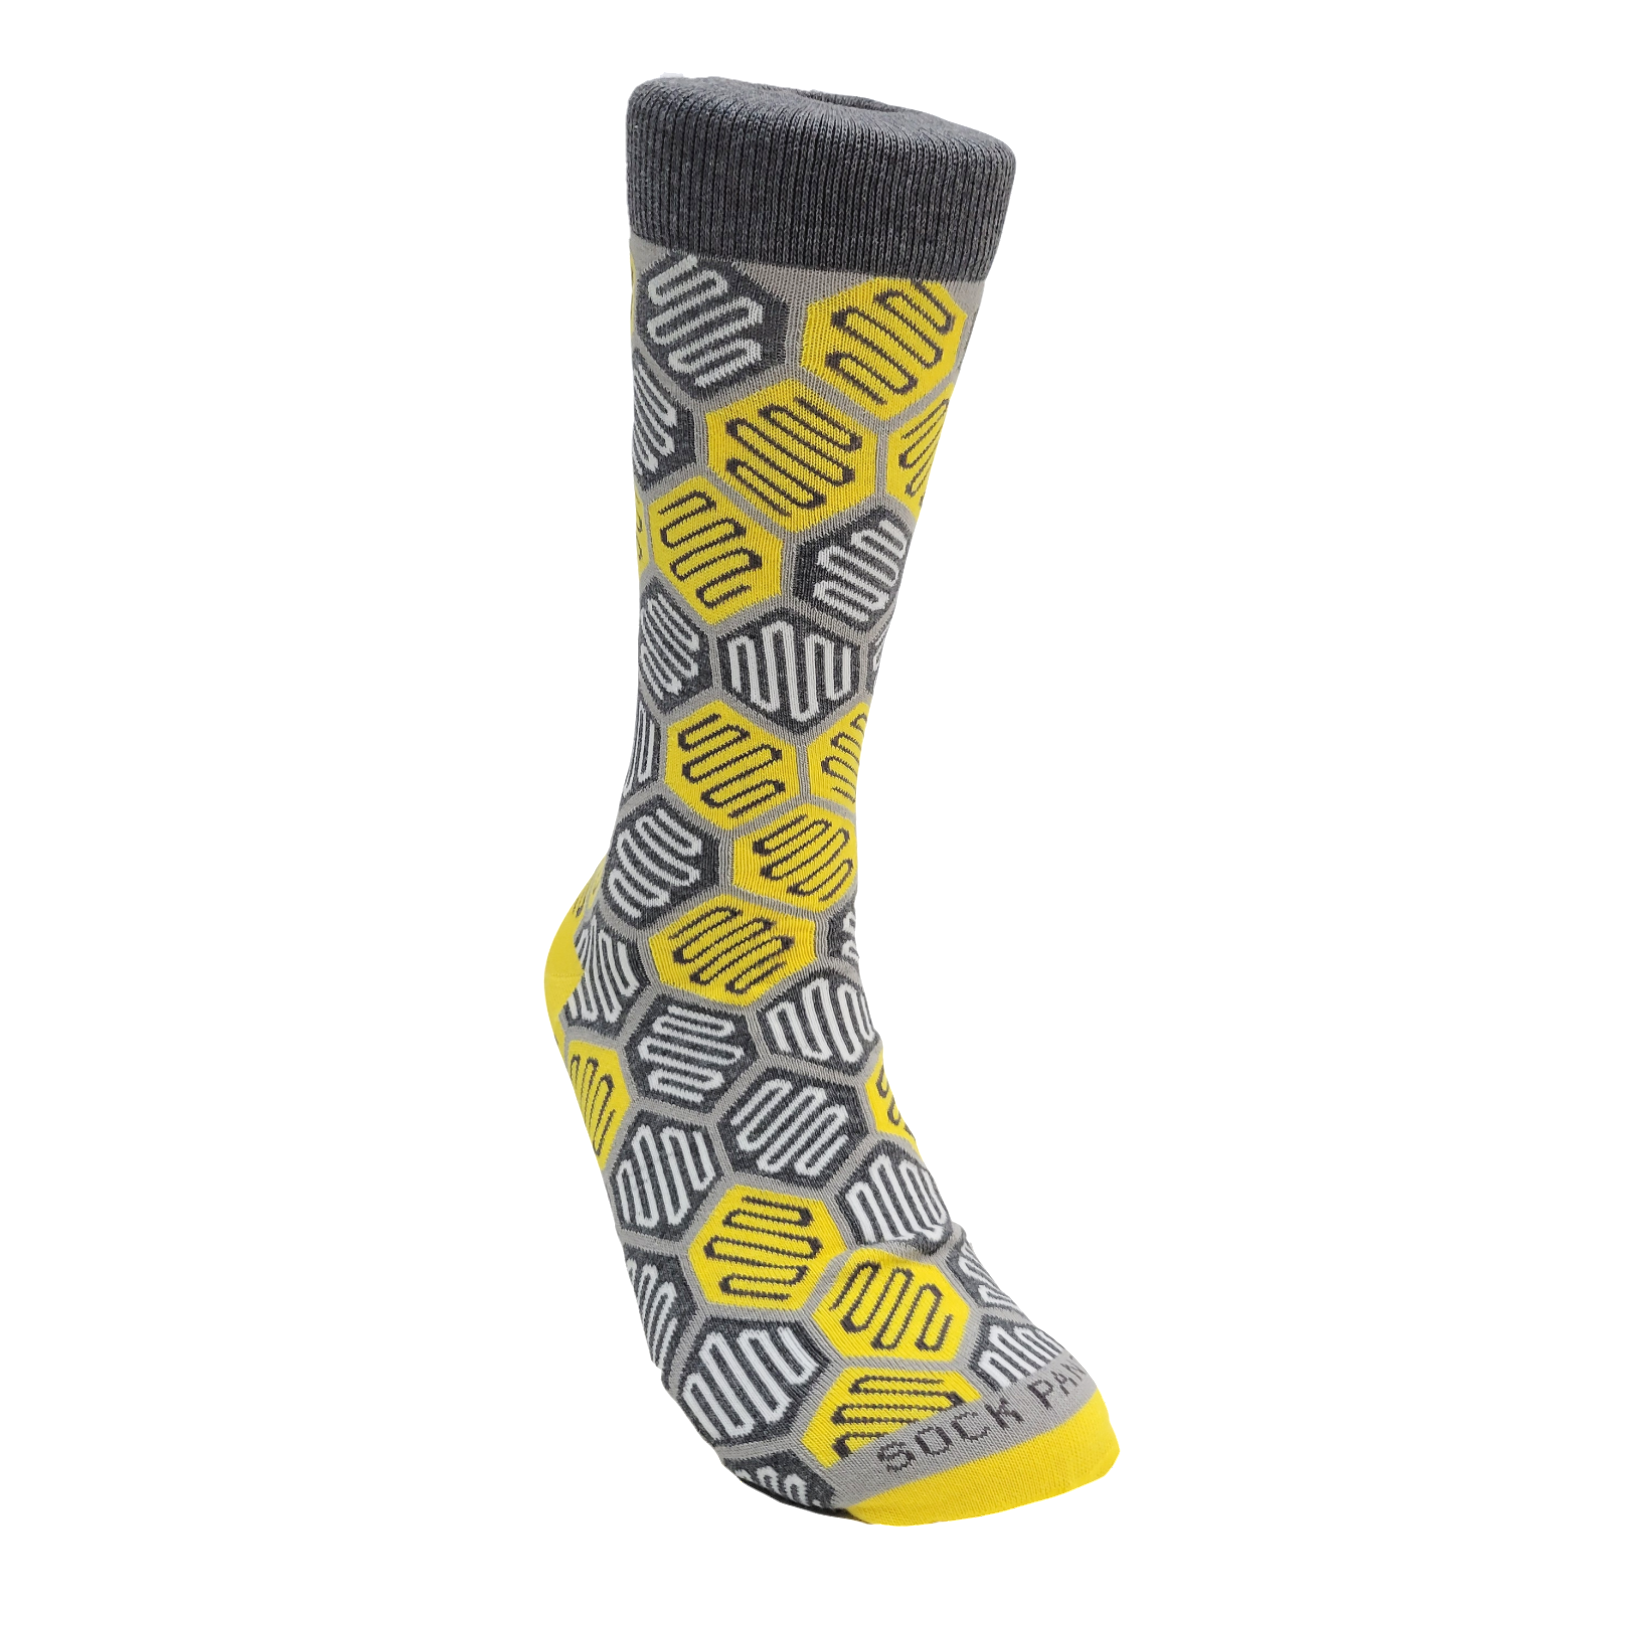 Yellow and Gray Hexagon Pattern Socks from the Sock Panda